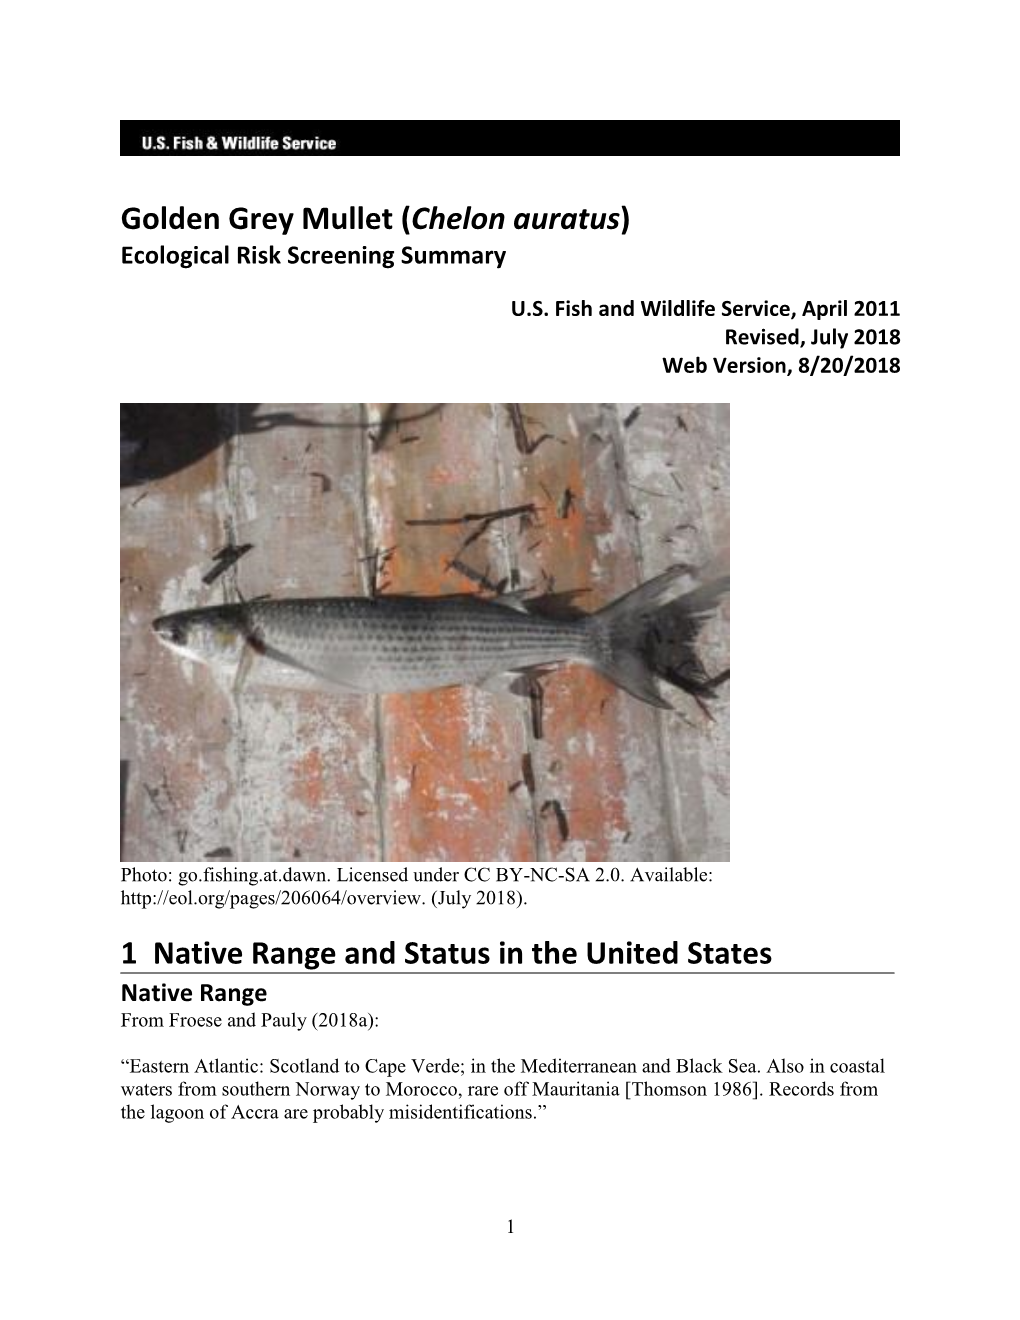 Golden Grey Mullet (Chelon Auratus) Ecological Risk Screening Summary